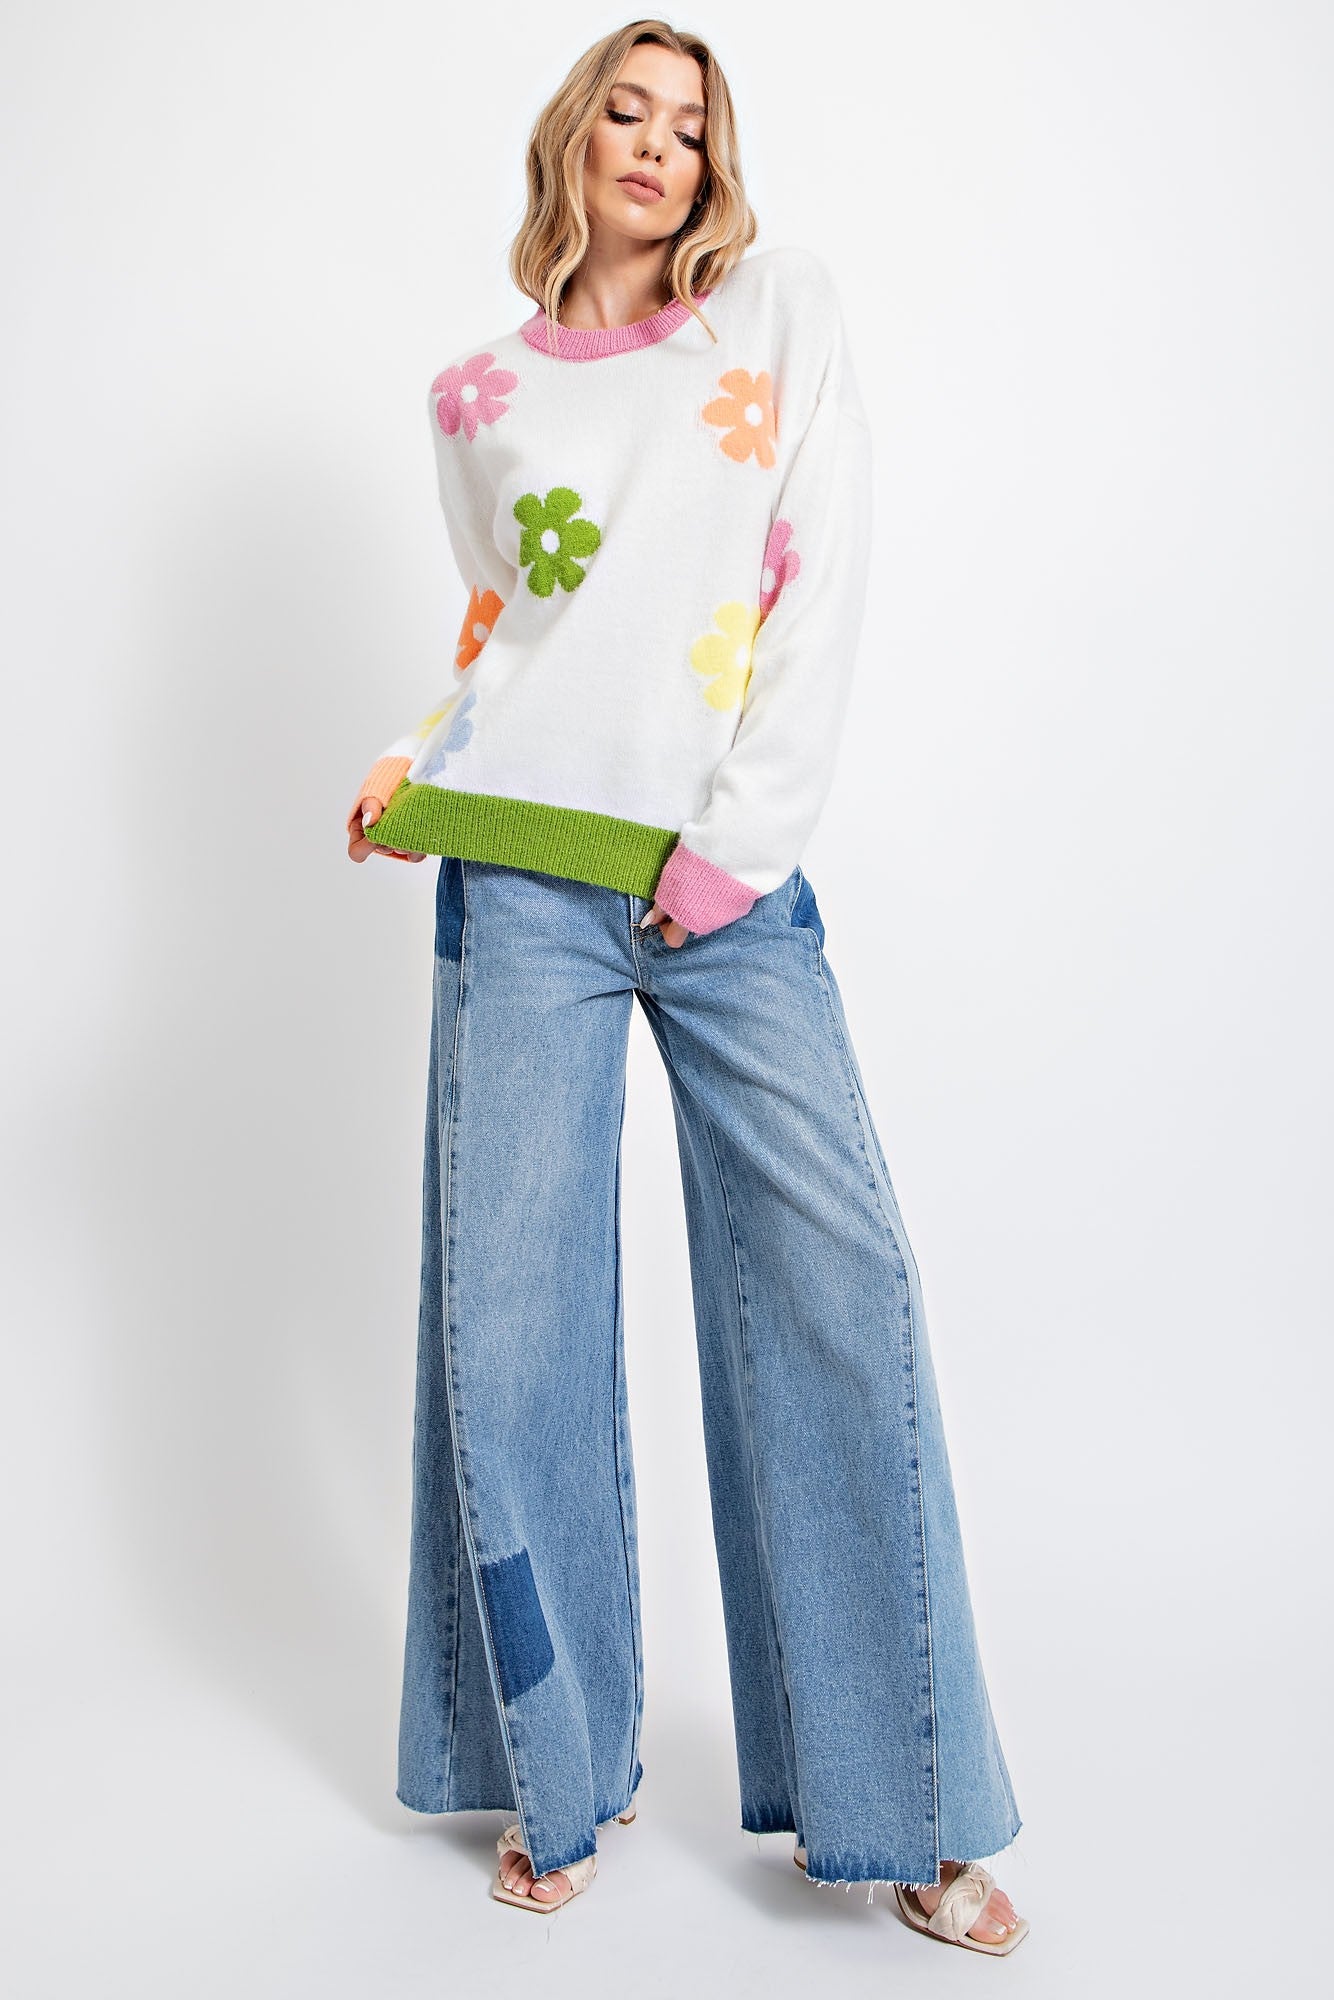 Flower/Daisy Patterned Sweater